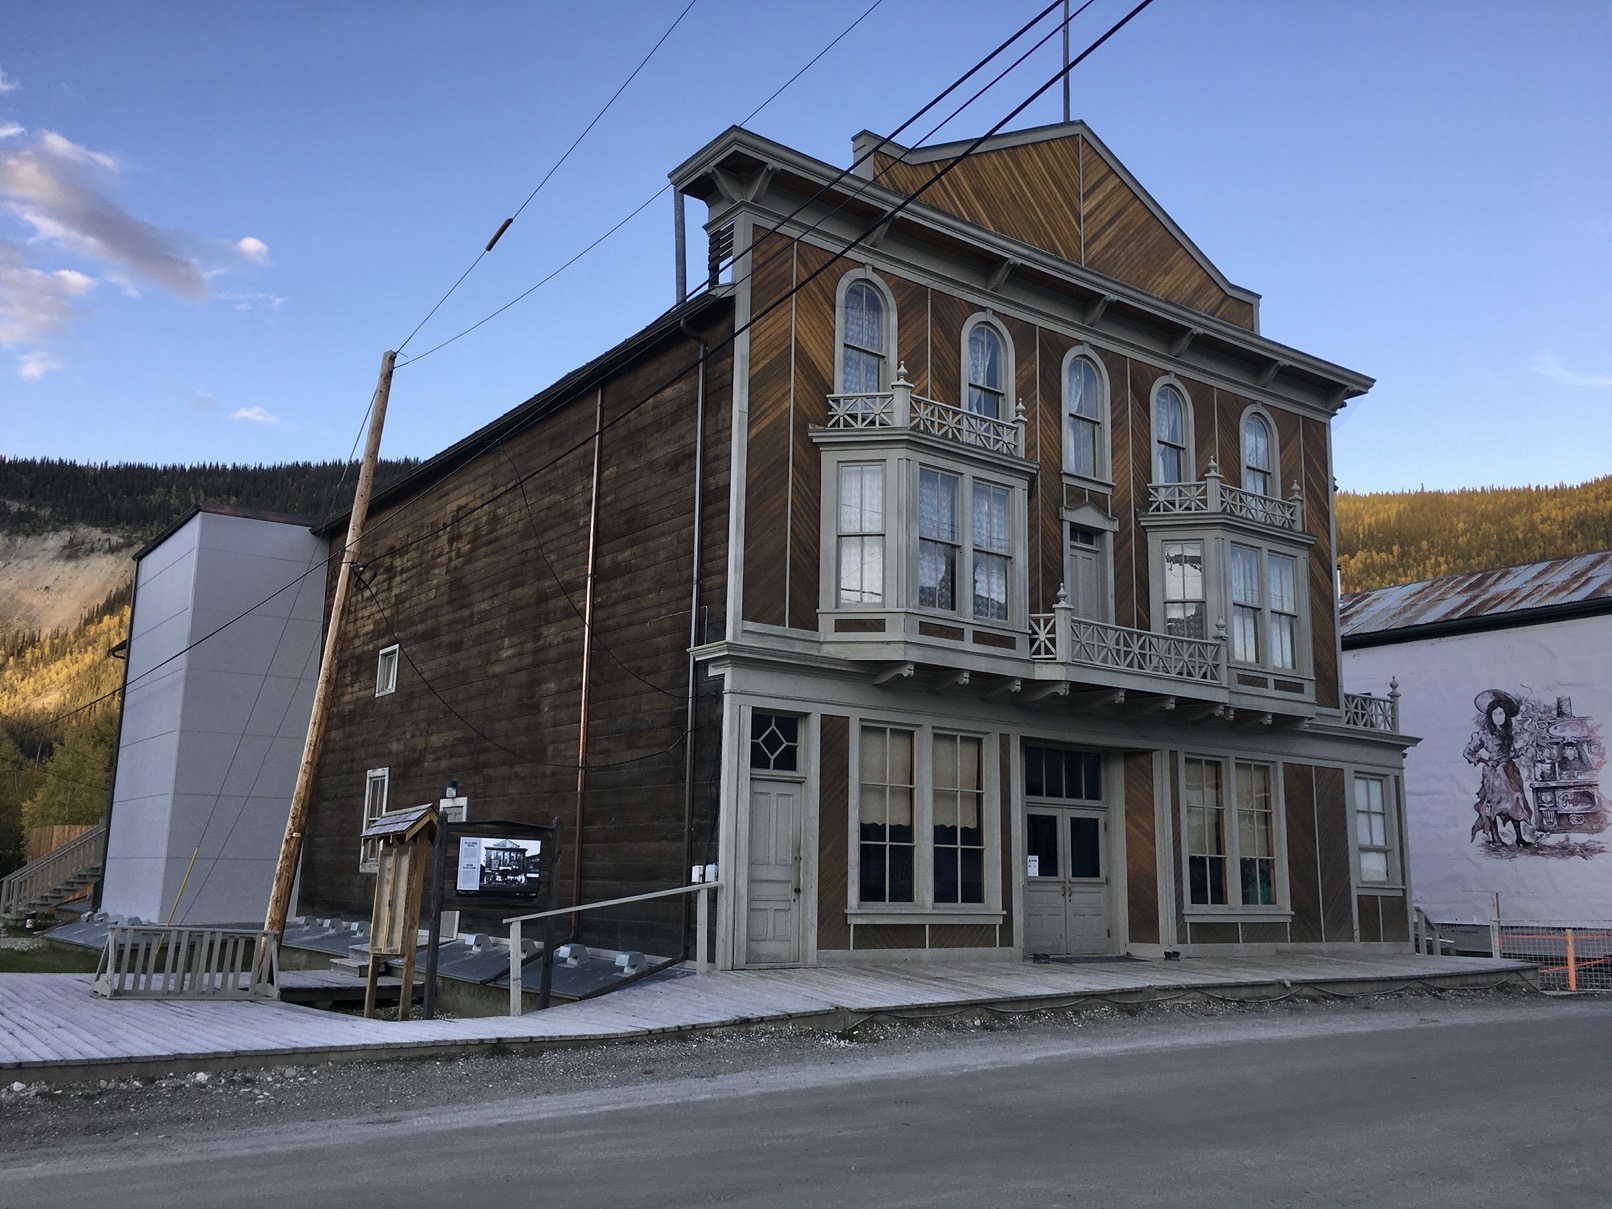 Visiting Dawson City